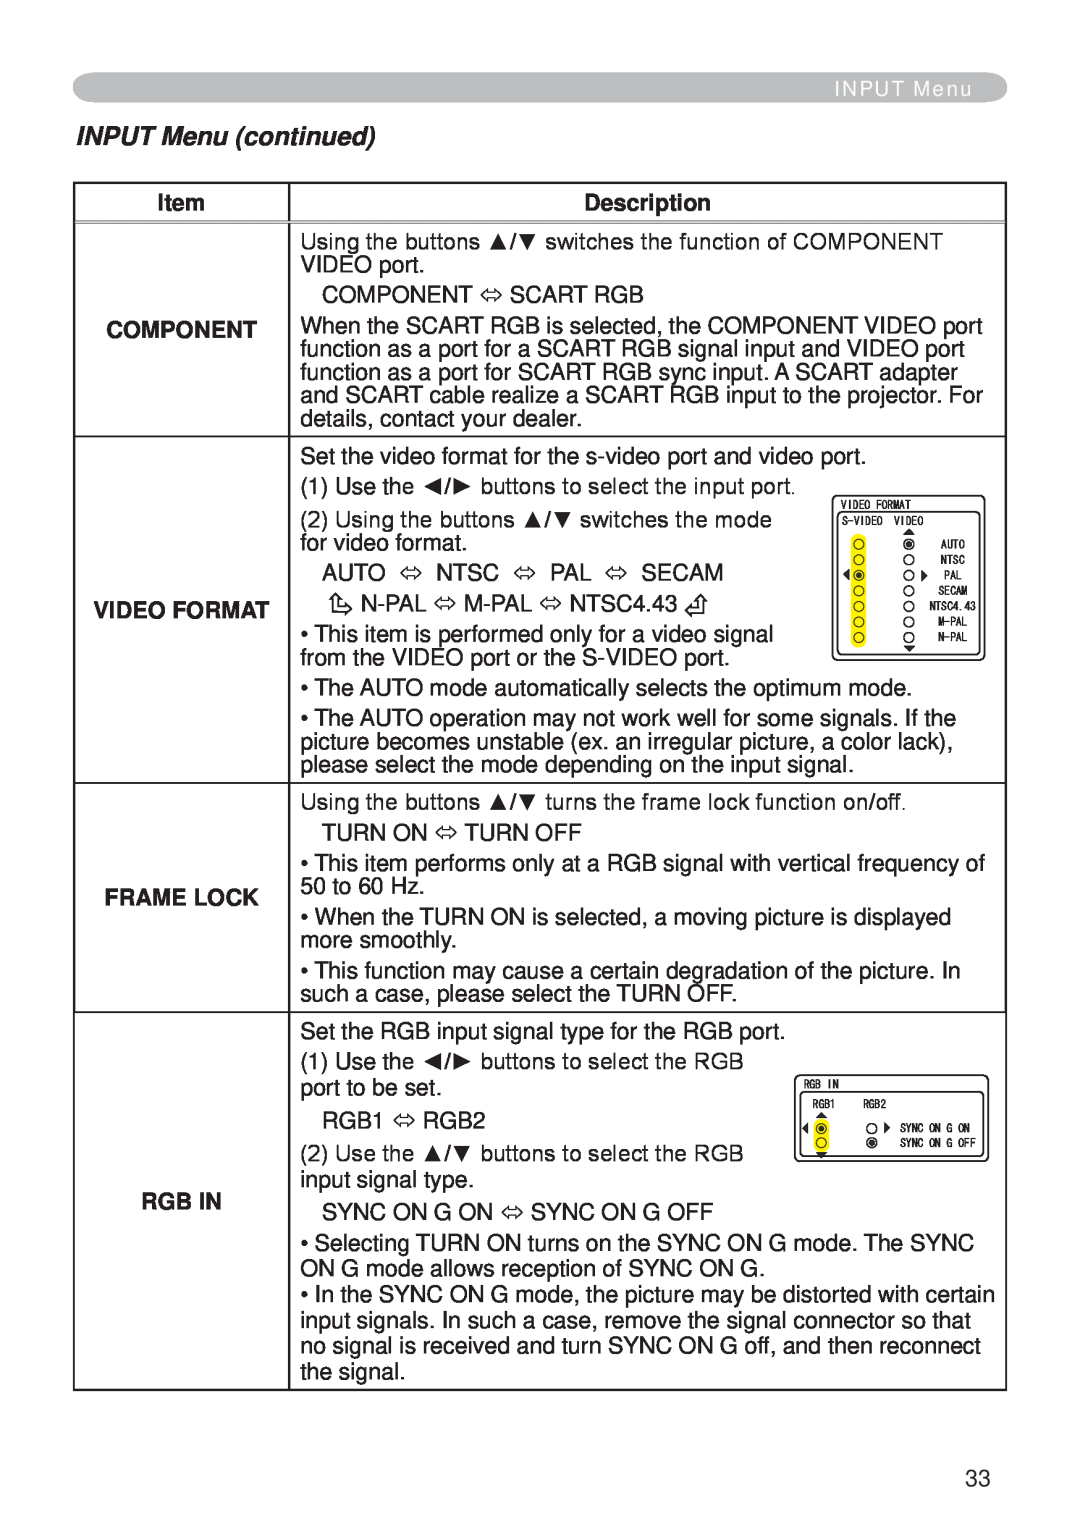 Hitachi CP-X265 user manual INPUT Menu continued, Description, Component, Video Format, Frame Lock, Rgb In 